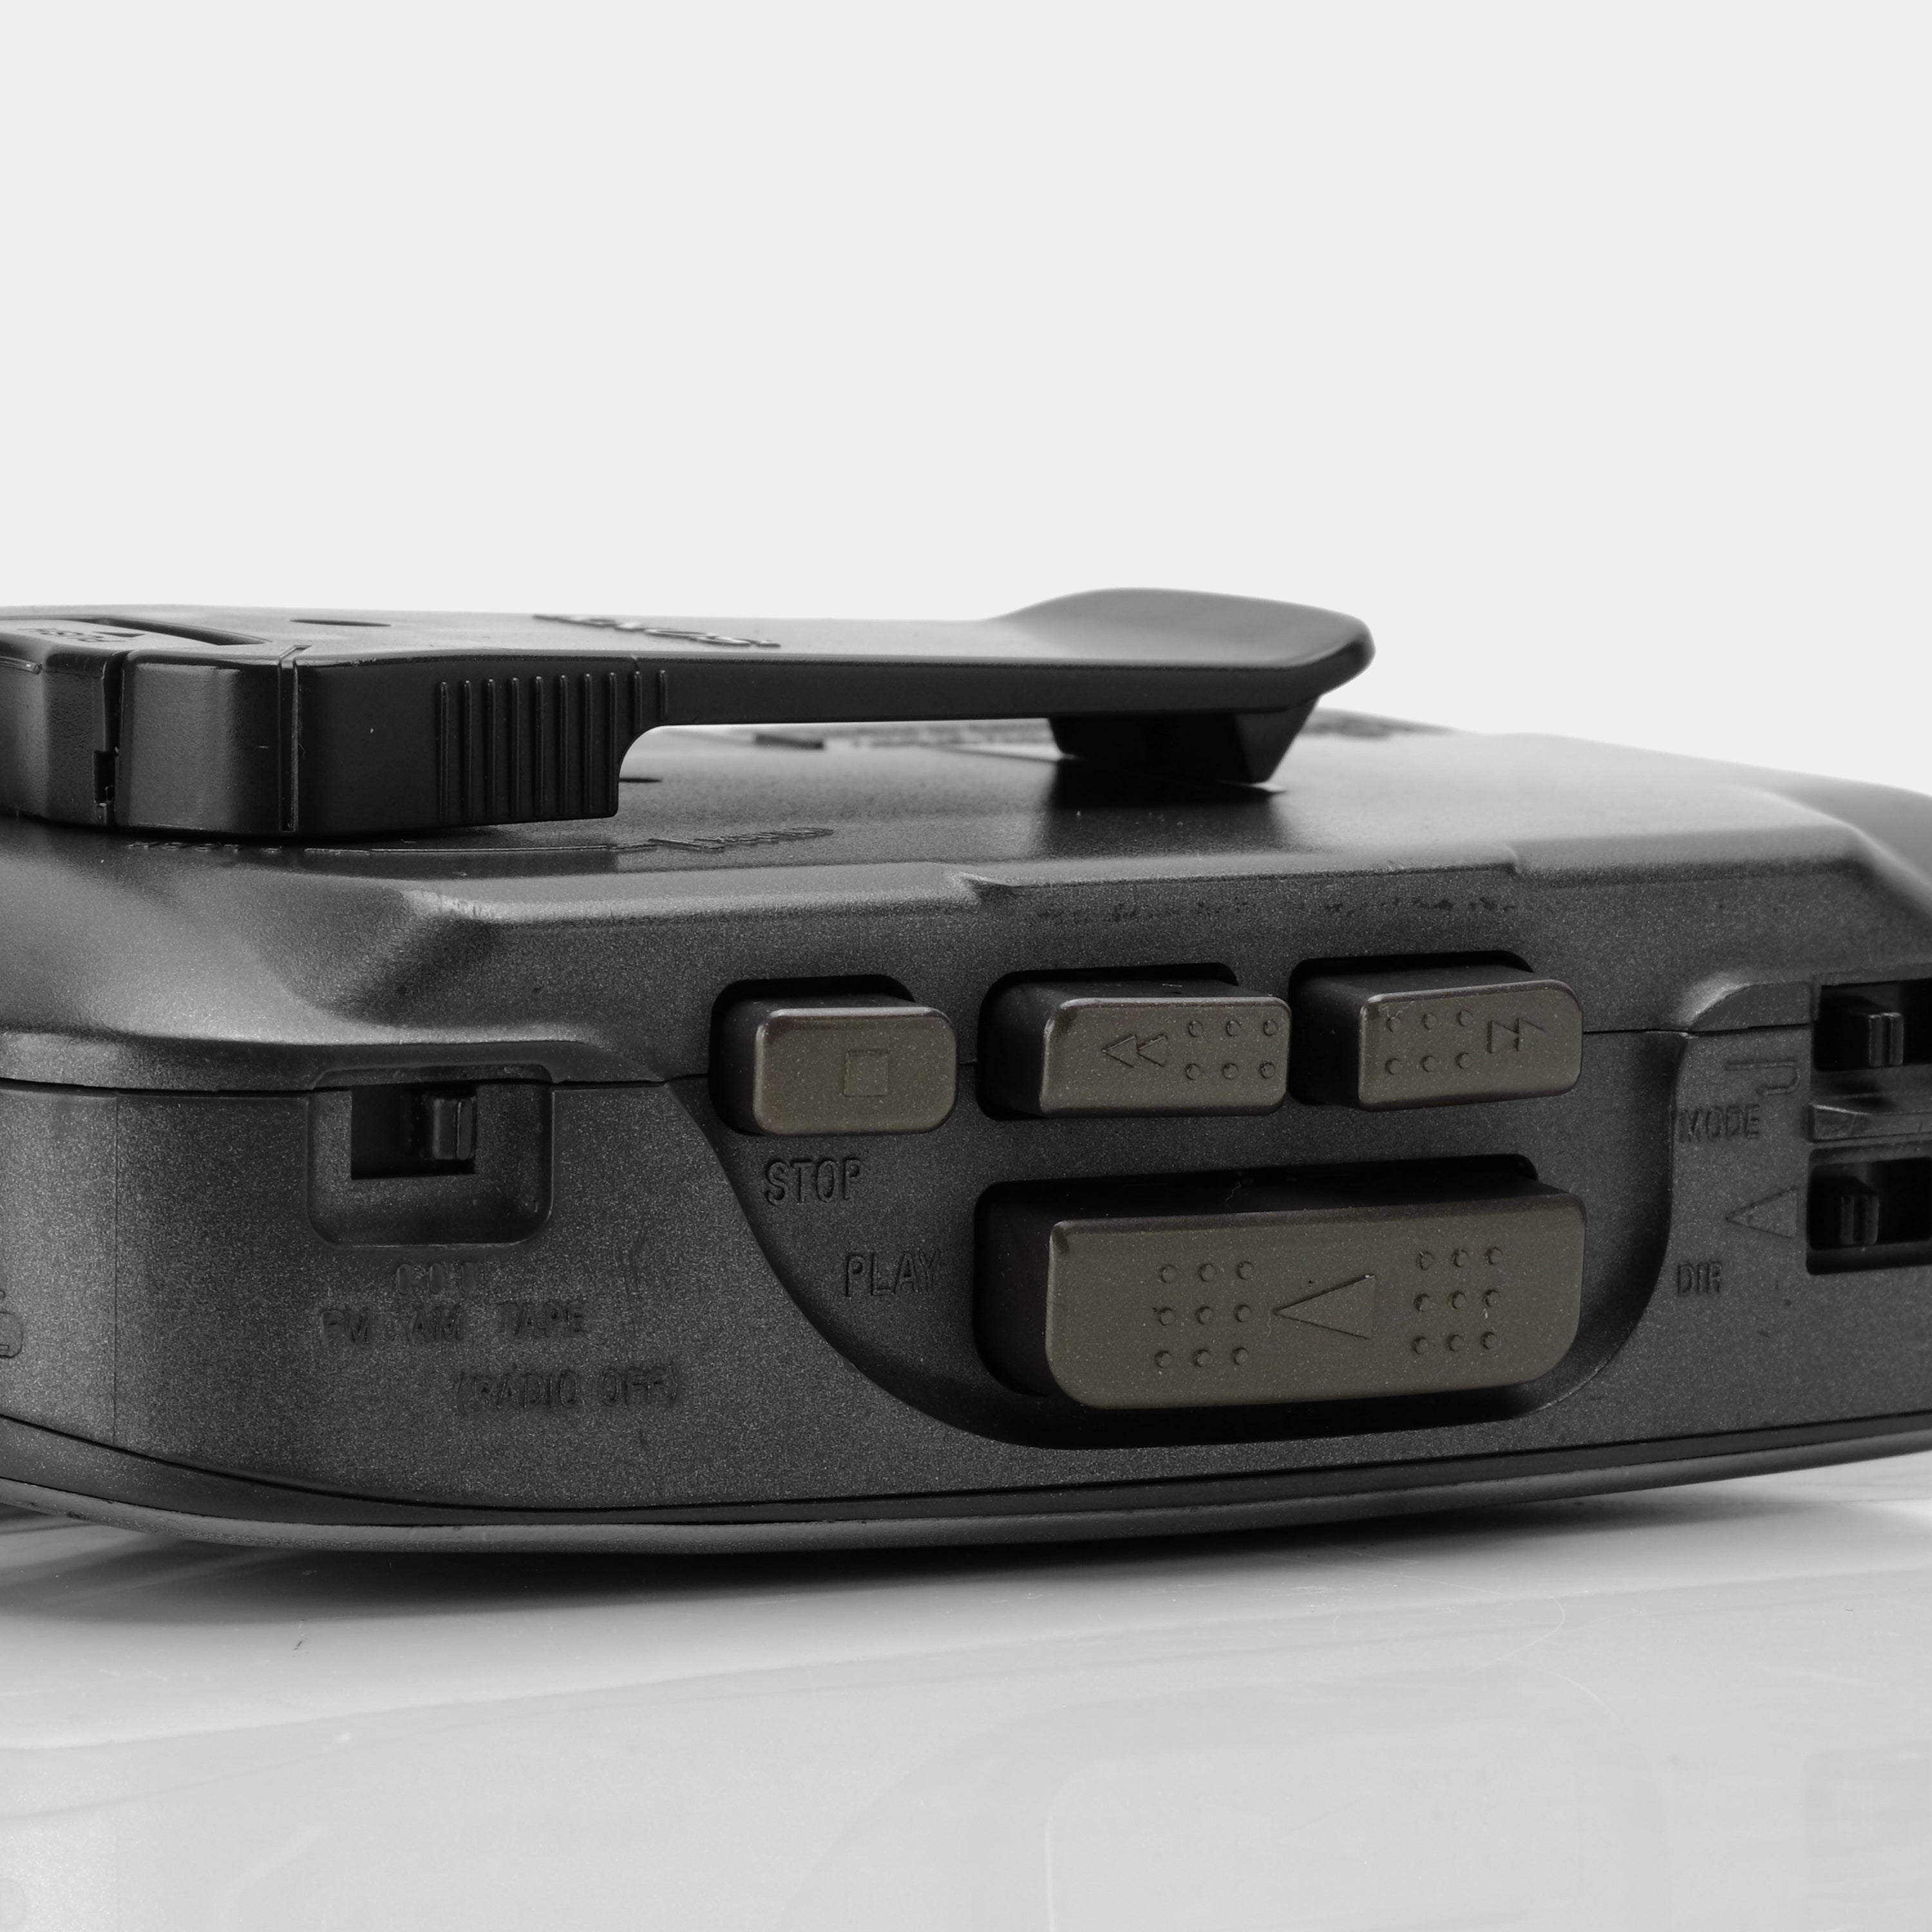 Sony Walkman WM-FX323 AM/FM Portable Cassette Player (B-Grade)